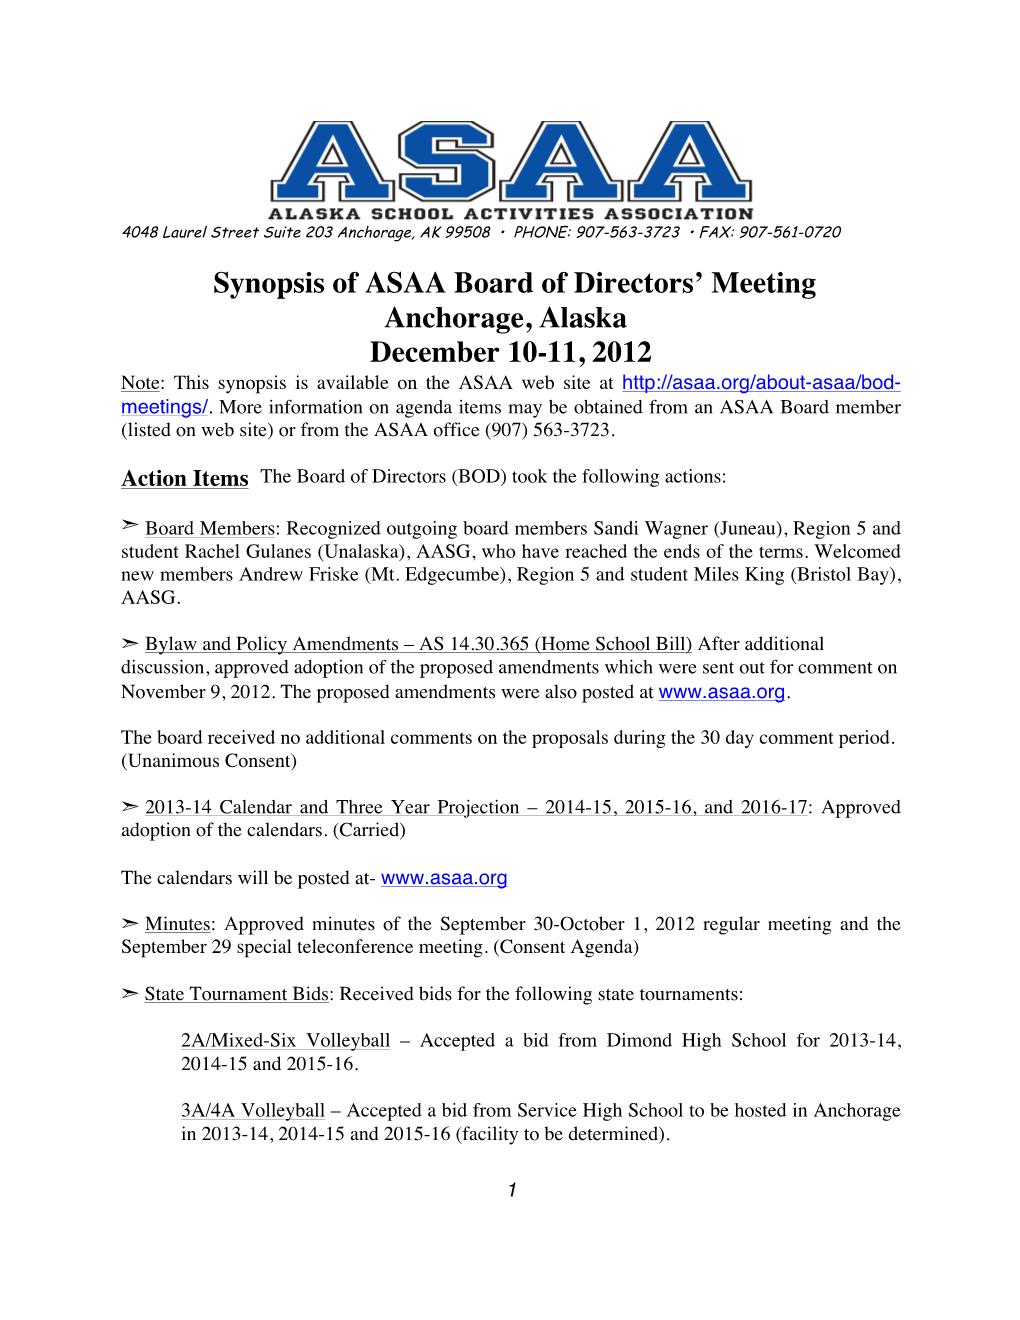 Synopsis of ASAA Board of Directors' Meeting Anchorage, Alaska